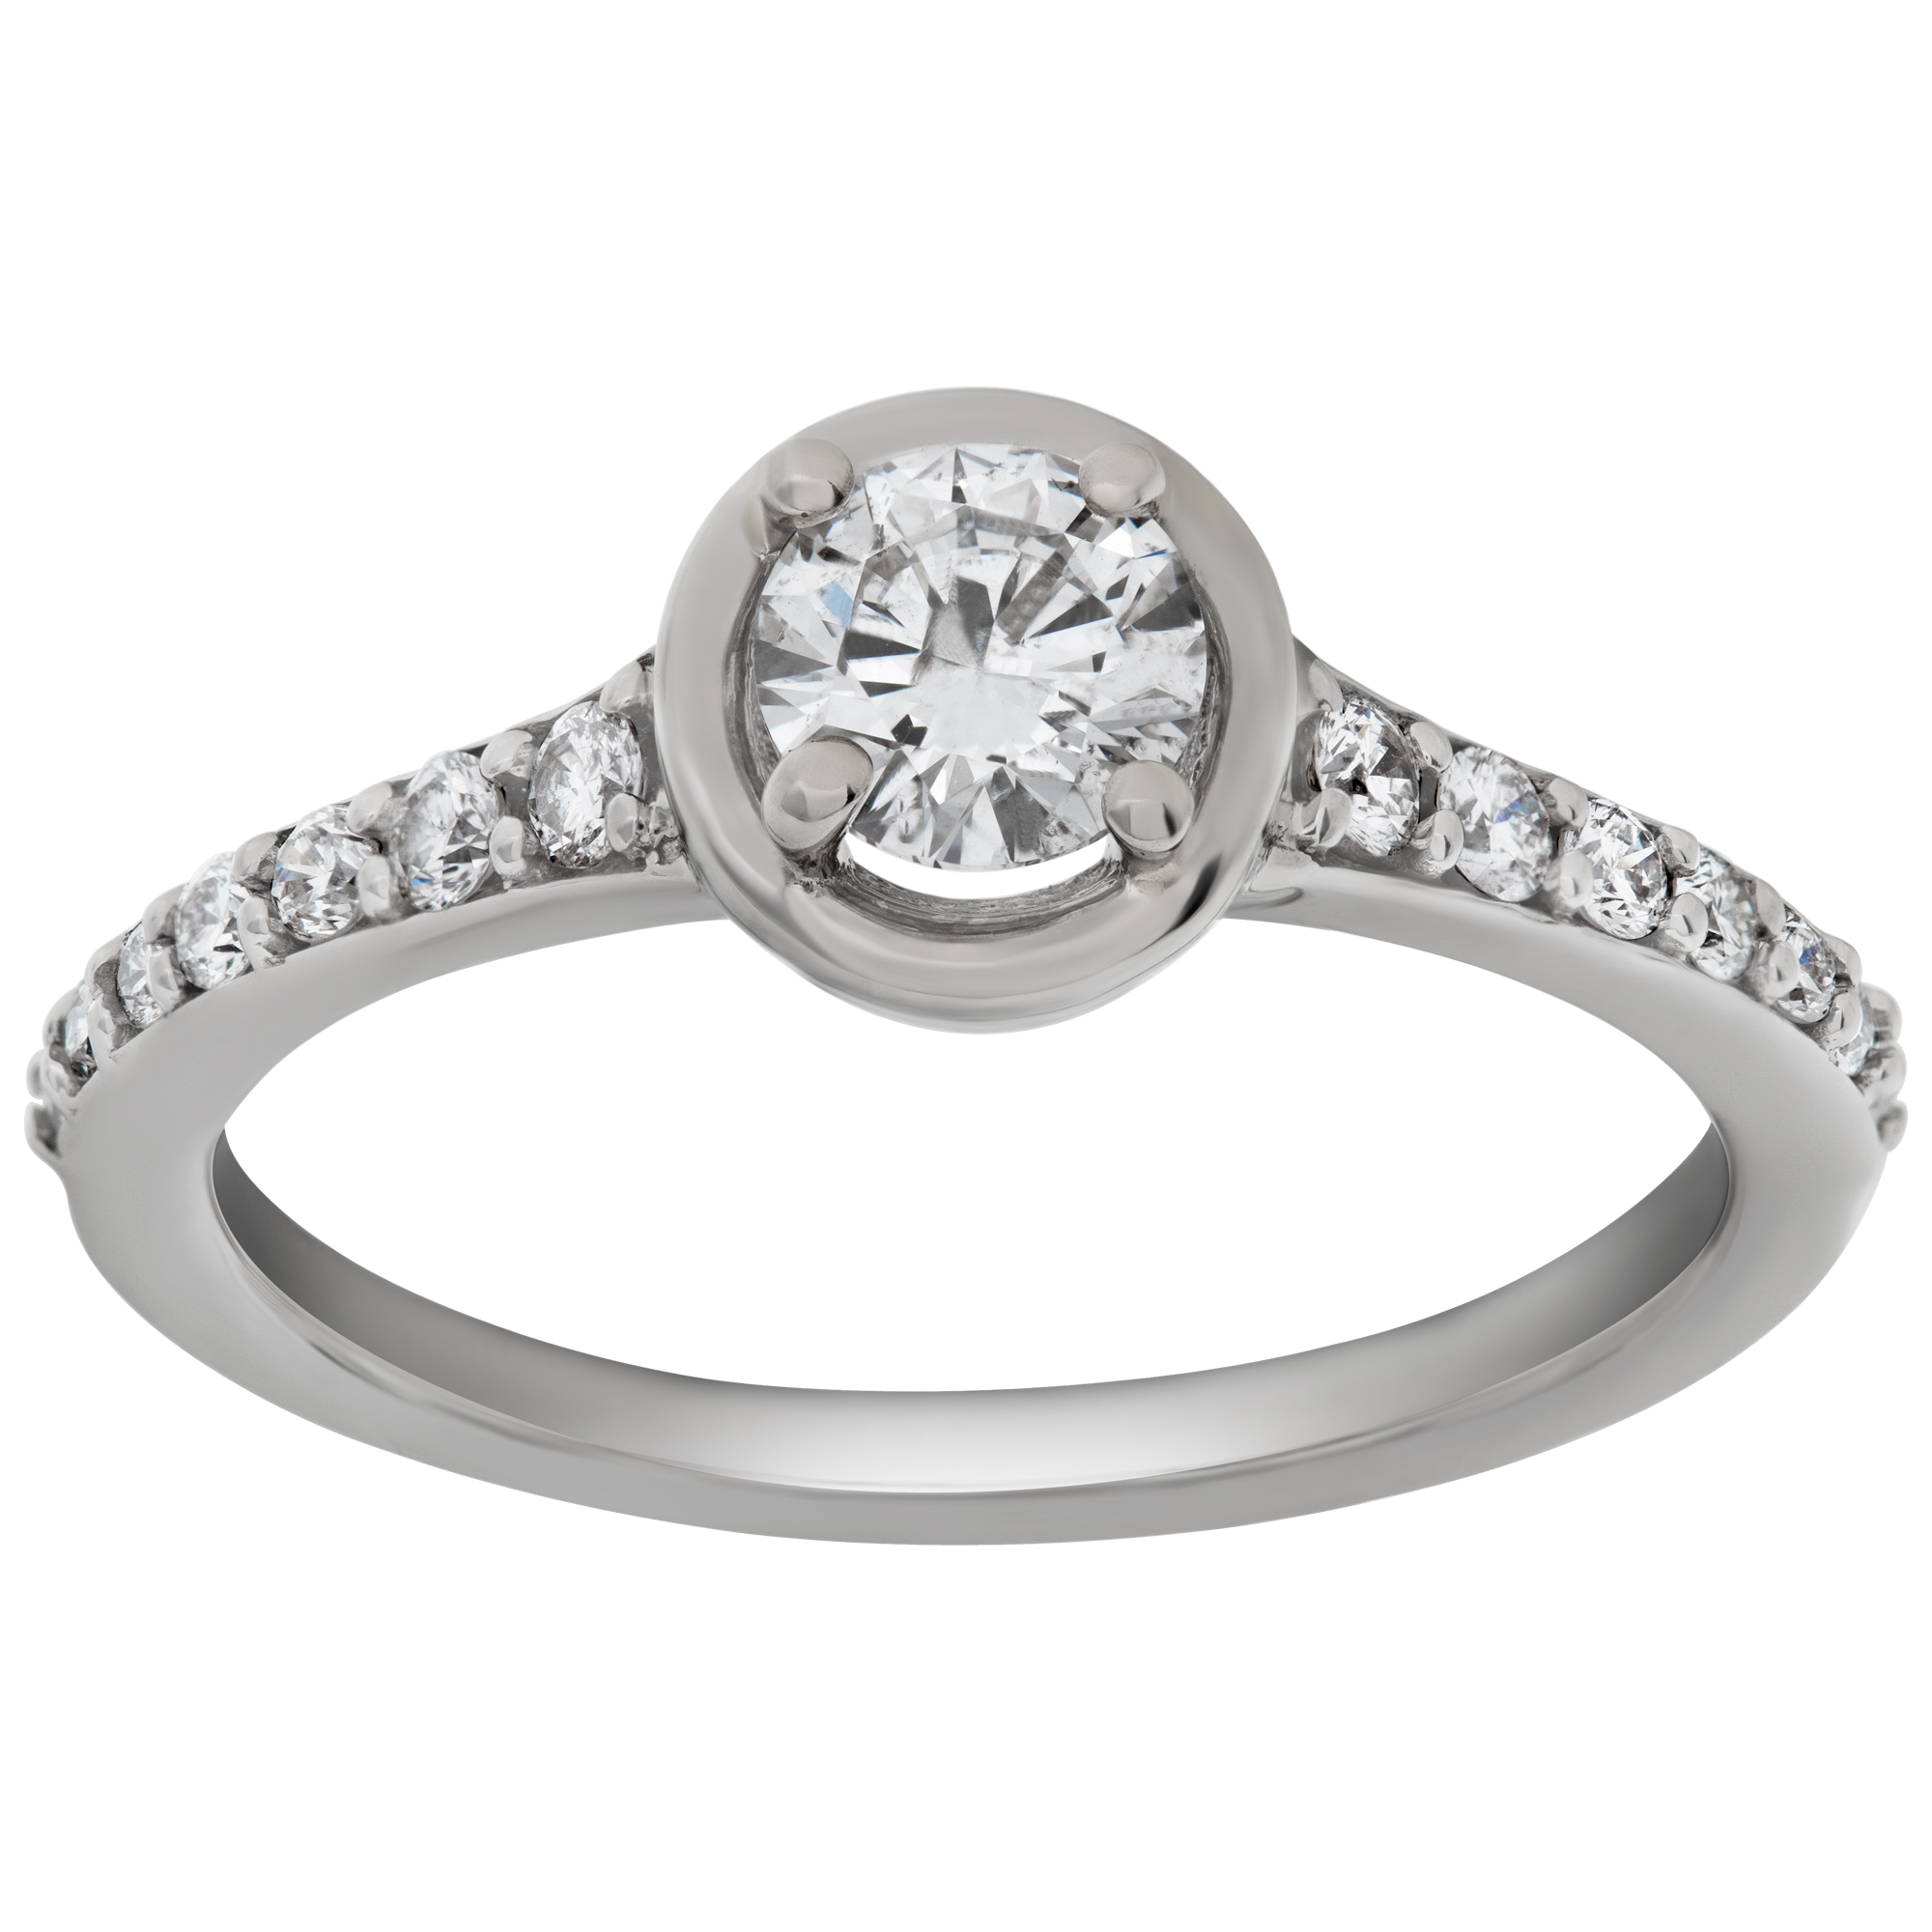 Diamond ring in 14k white gold. 0.75 carats in diamonds. Size 7.25